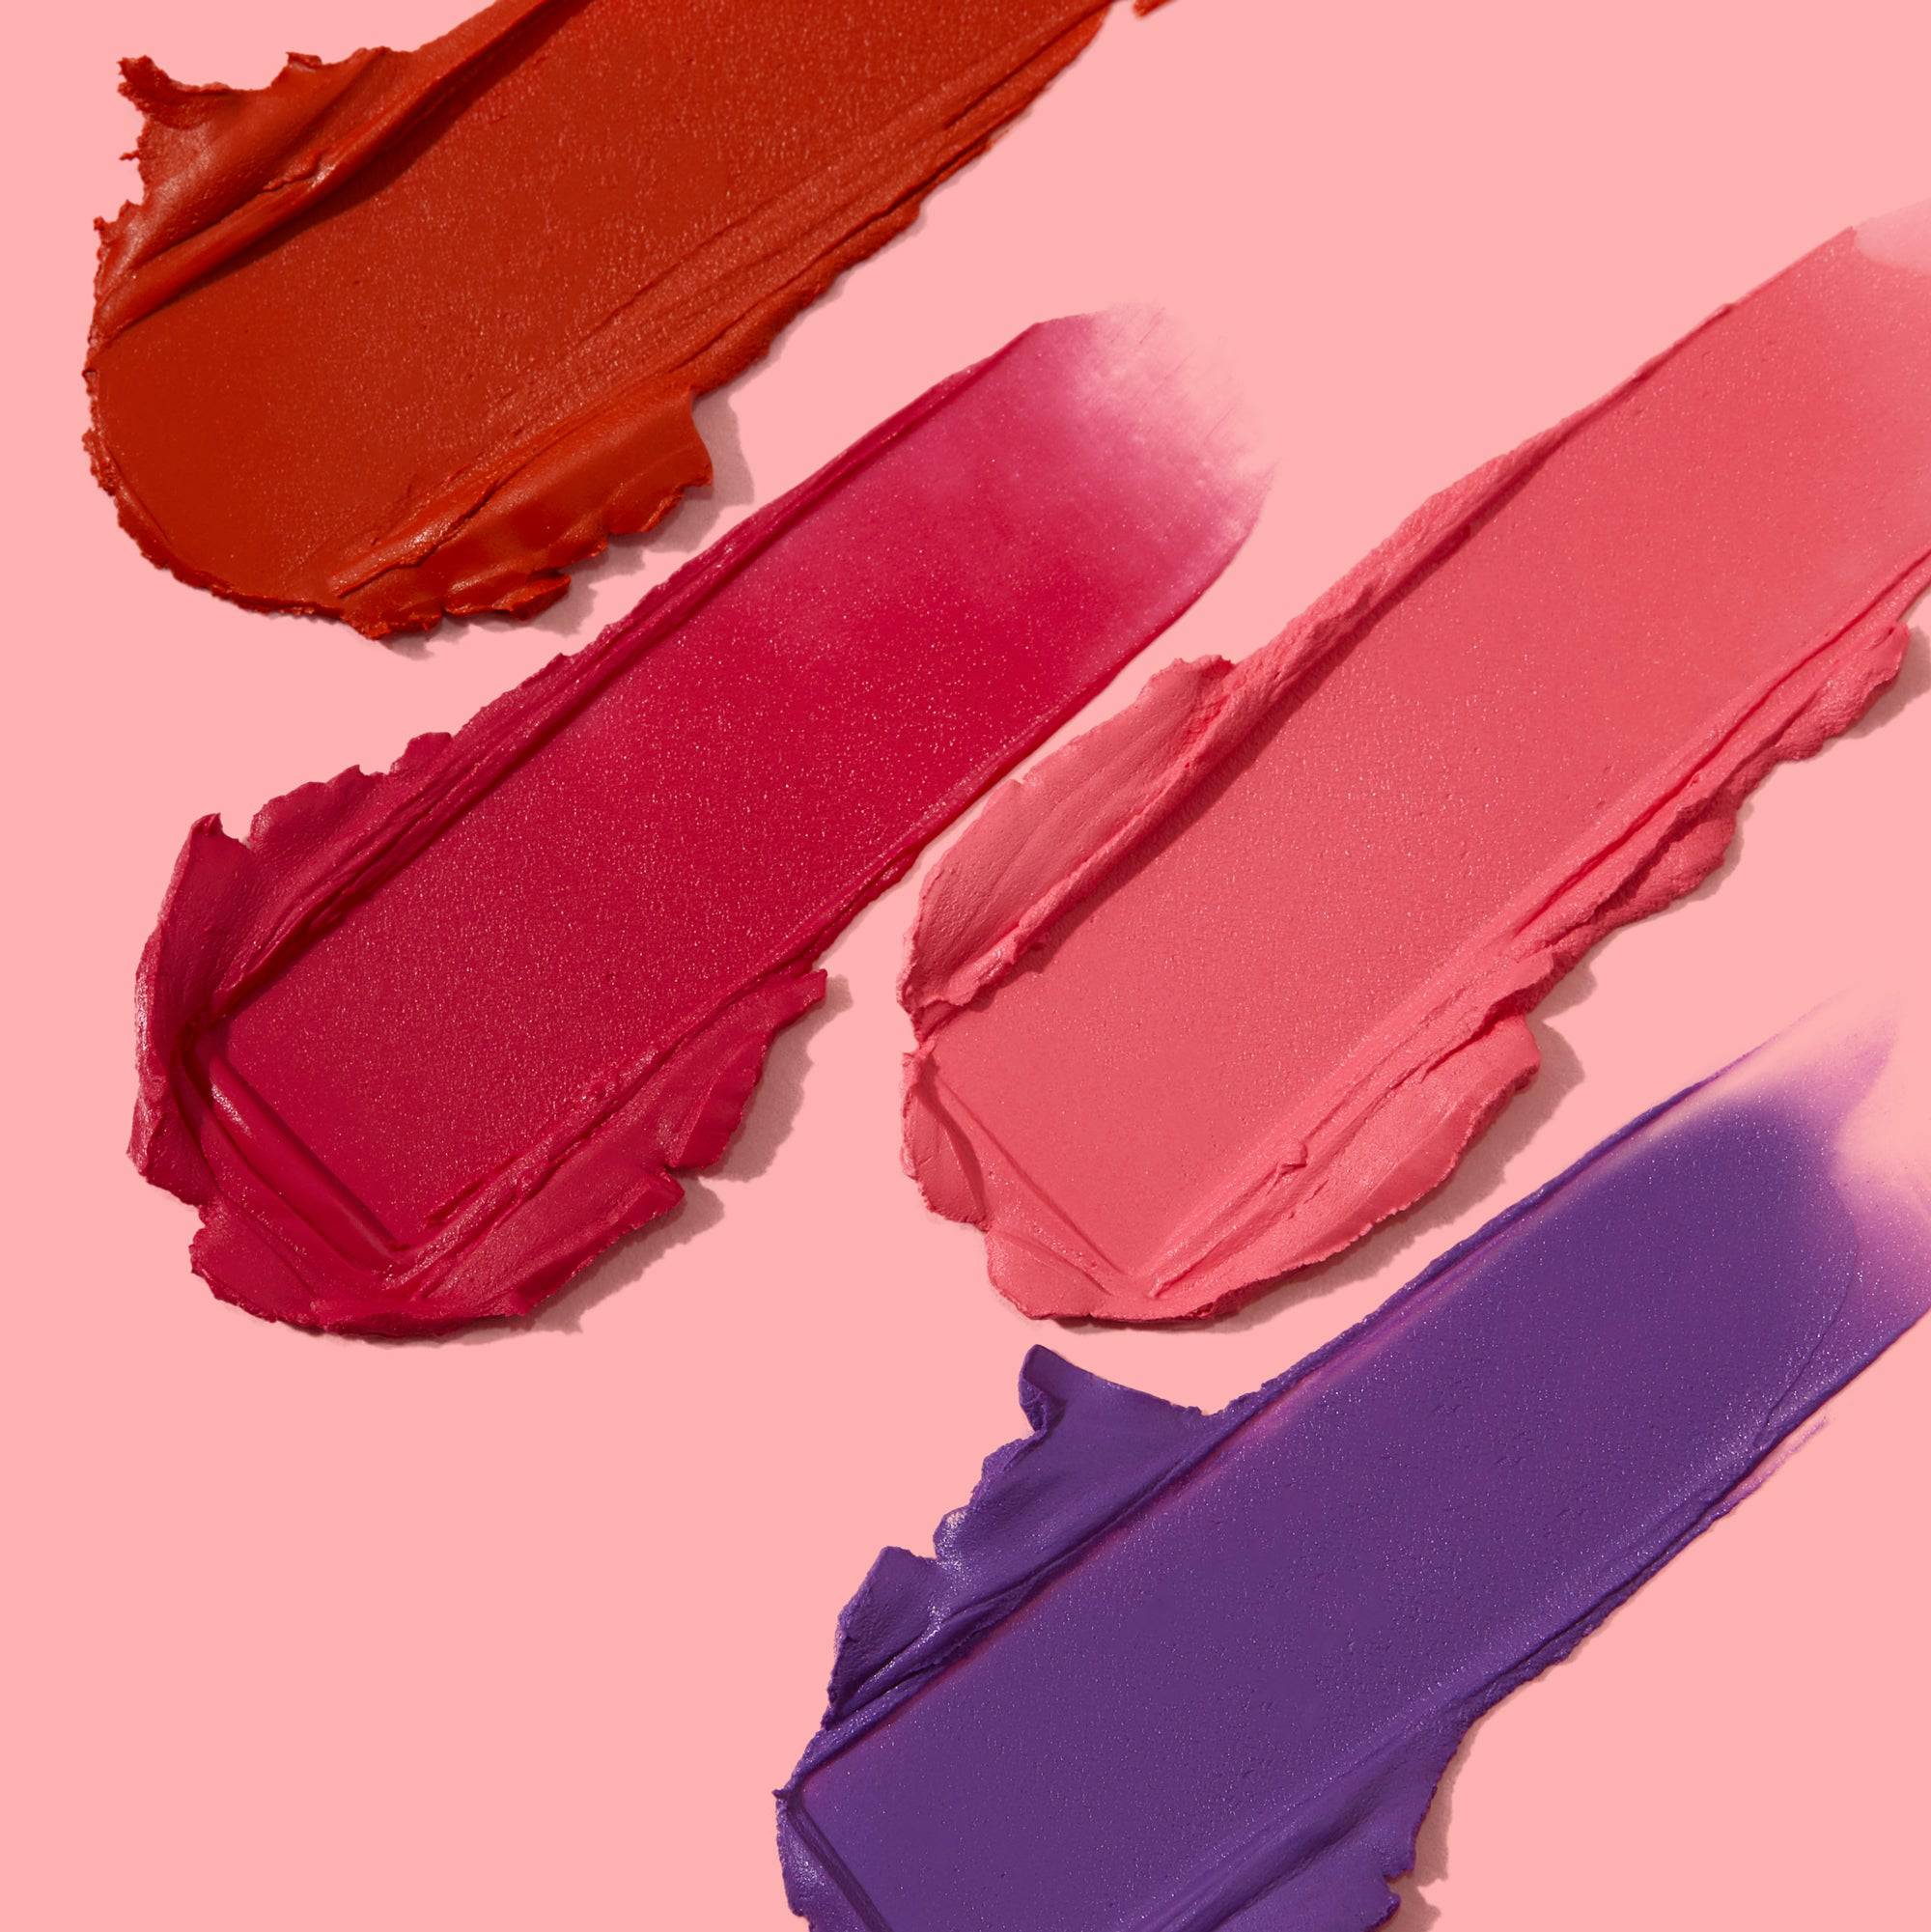 Cream Blush & Brush Bundle - Coloured Raine Cosmetics